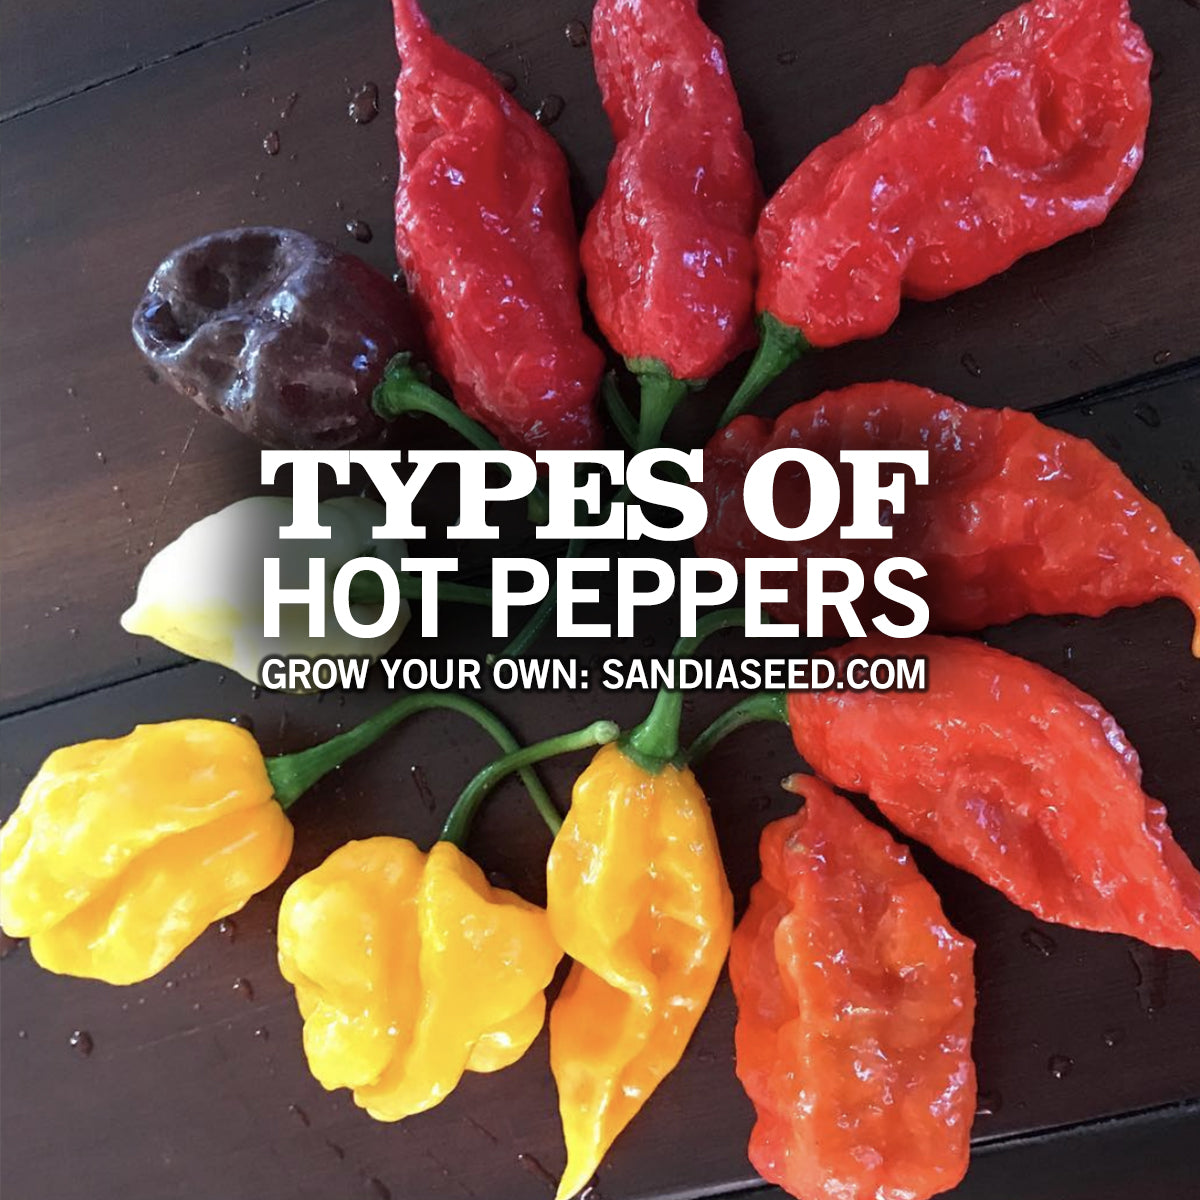 Red Pepper Types Order Cheap, Save 48 jlcatj.gob.mx